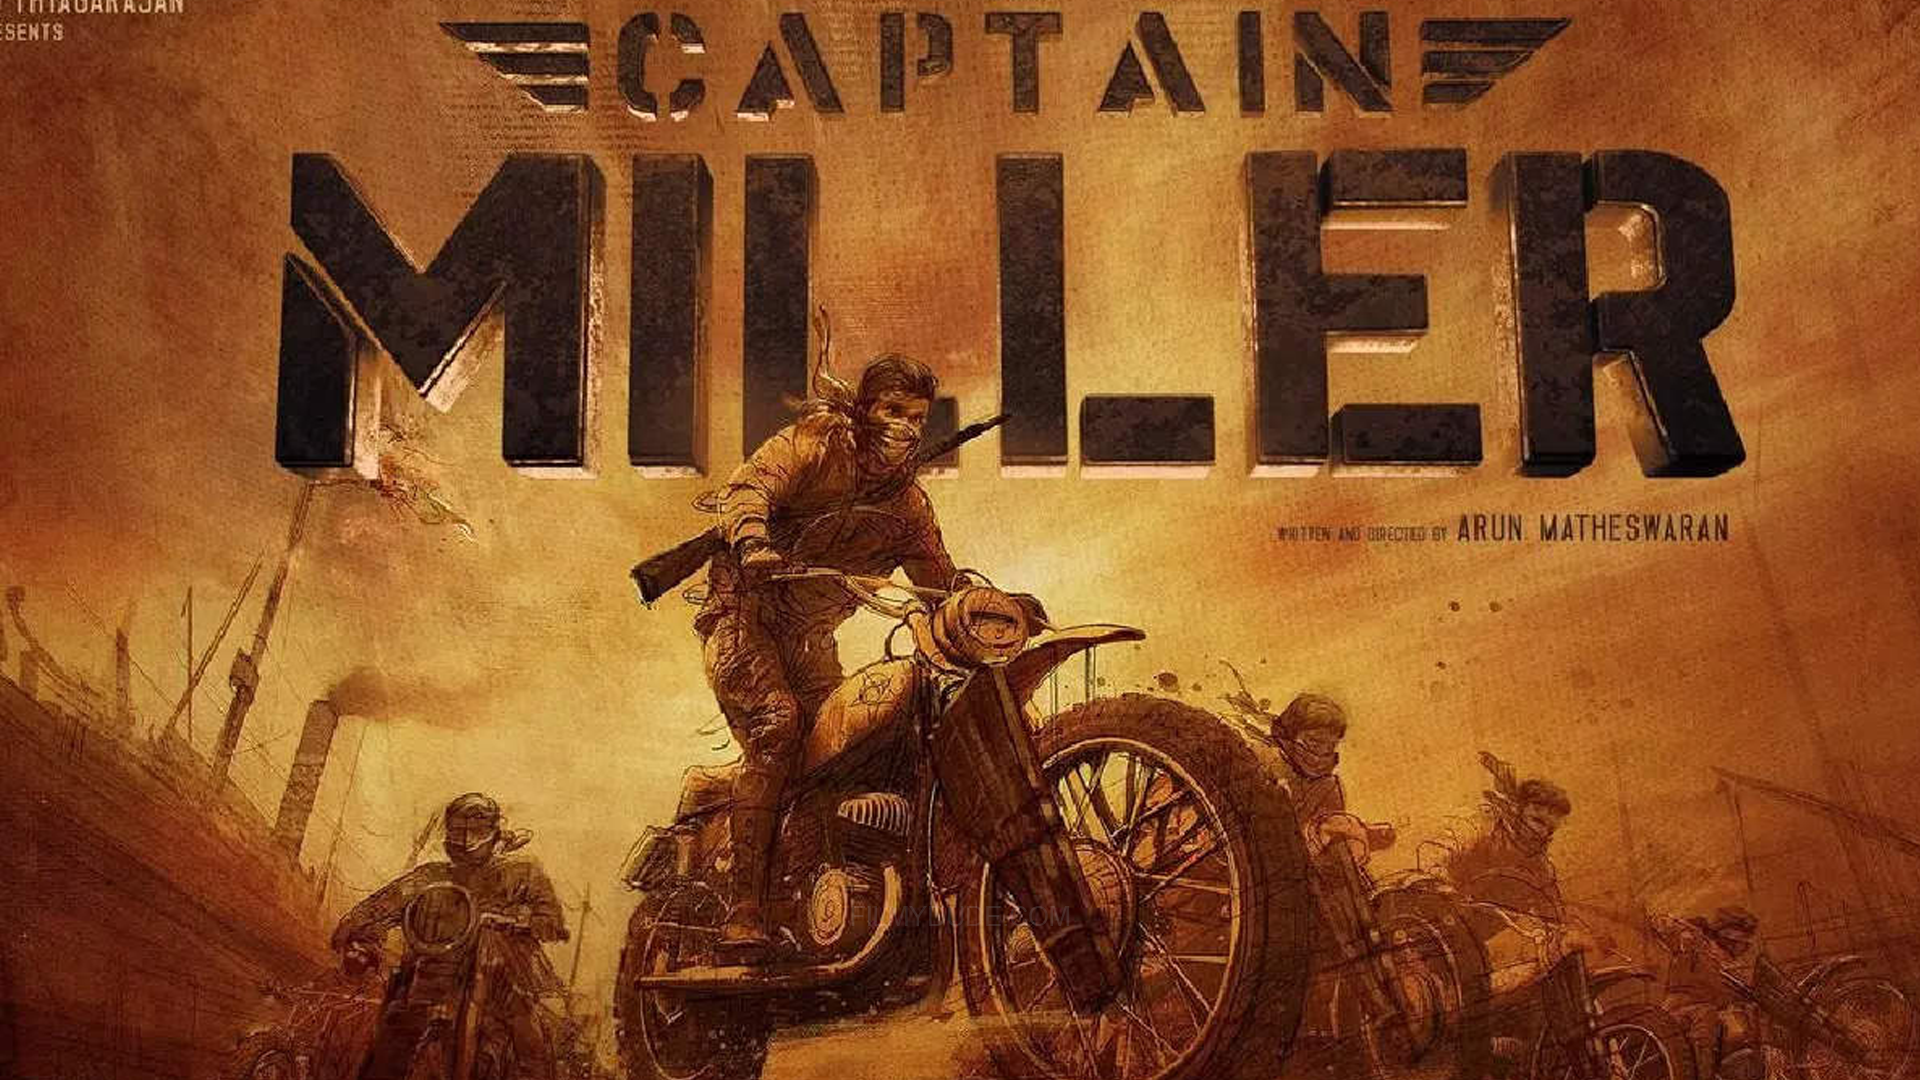 About Captain Miller